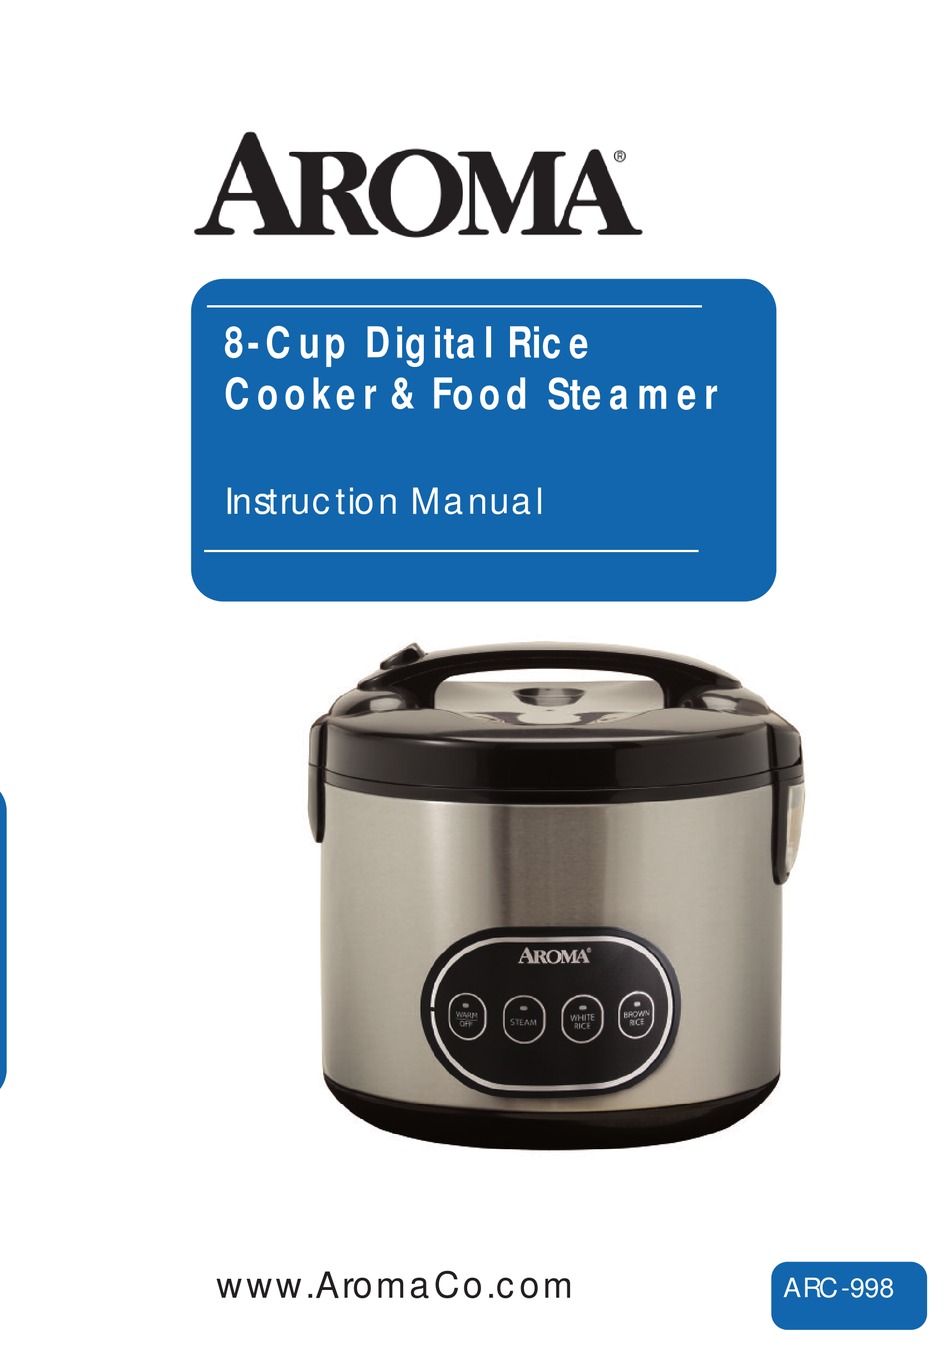 AROMA ARC-998 INSTRUCTION MANUAL Pdf Download | ManualsLib Aroma Rice Cooker Arc 996 Manual